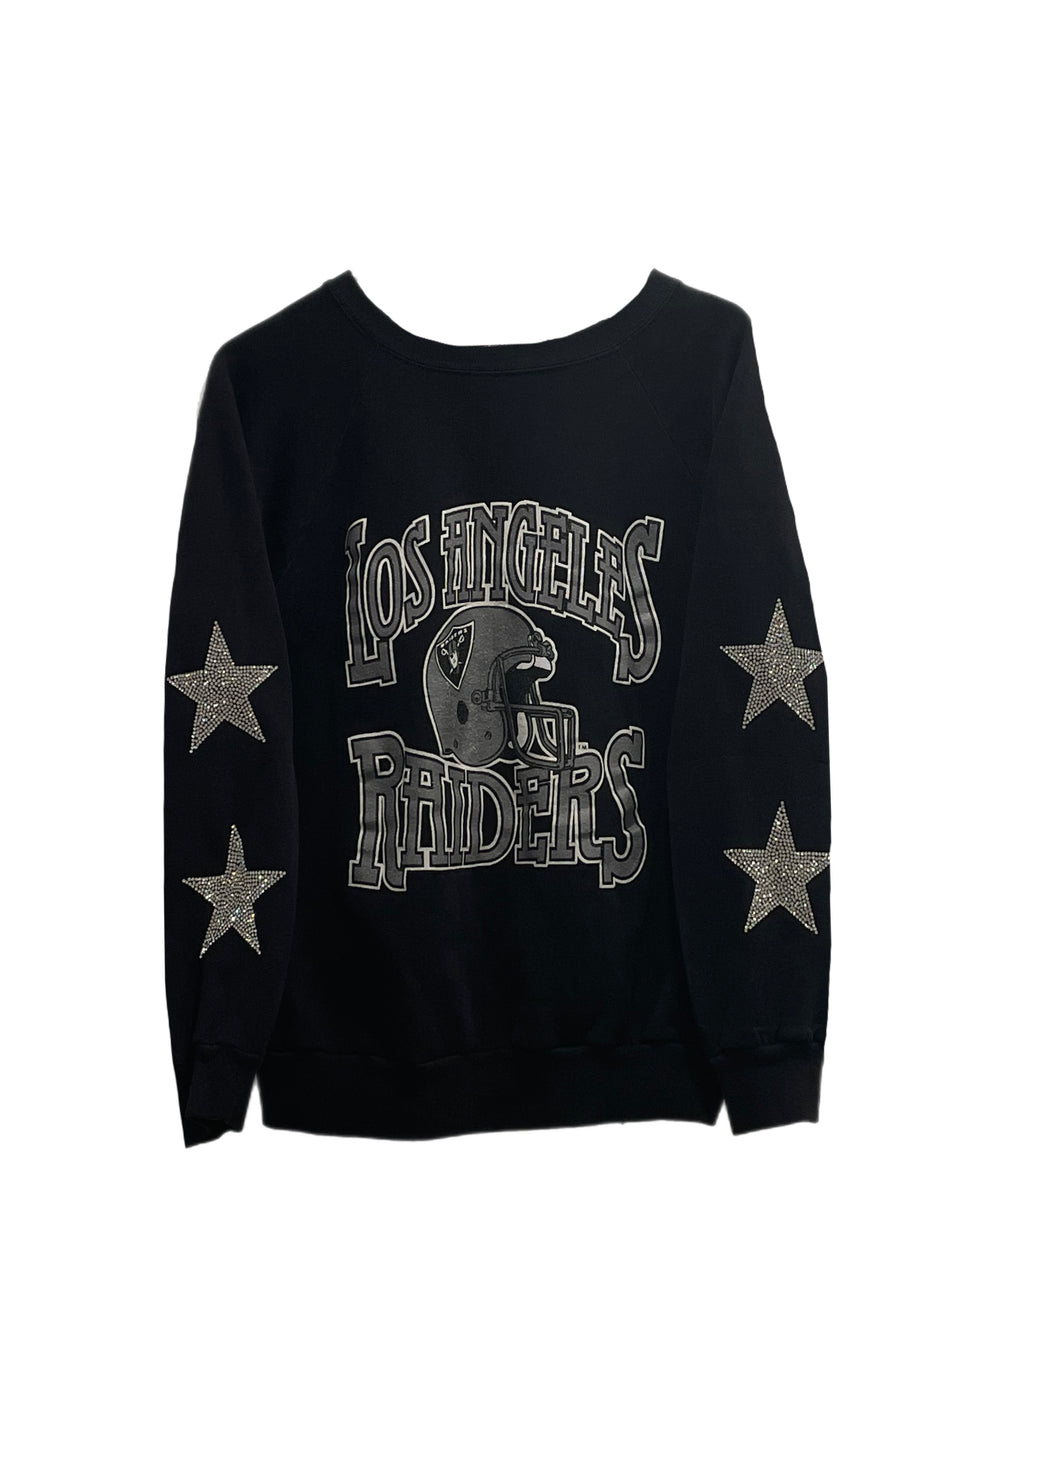 Las Vegas Raiders, NFL One of a KIND Vintage Sweatshirt with Crystal Star Design